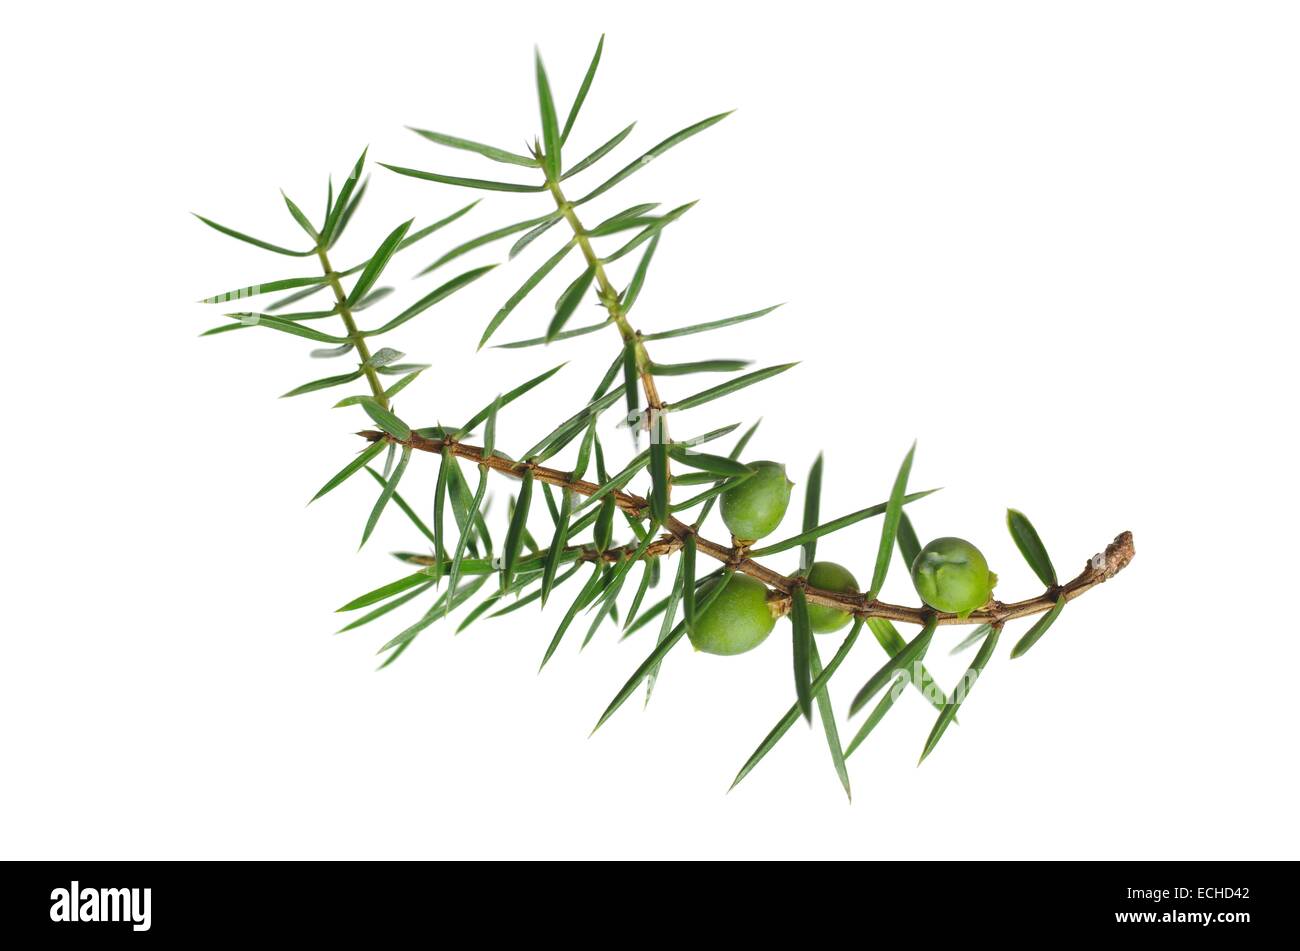 Juniperus communis Cut Out Stock Images & Pictures - Alamy